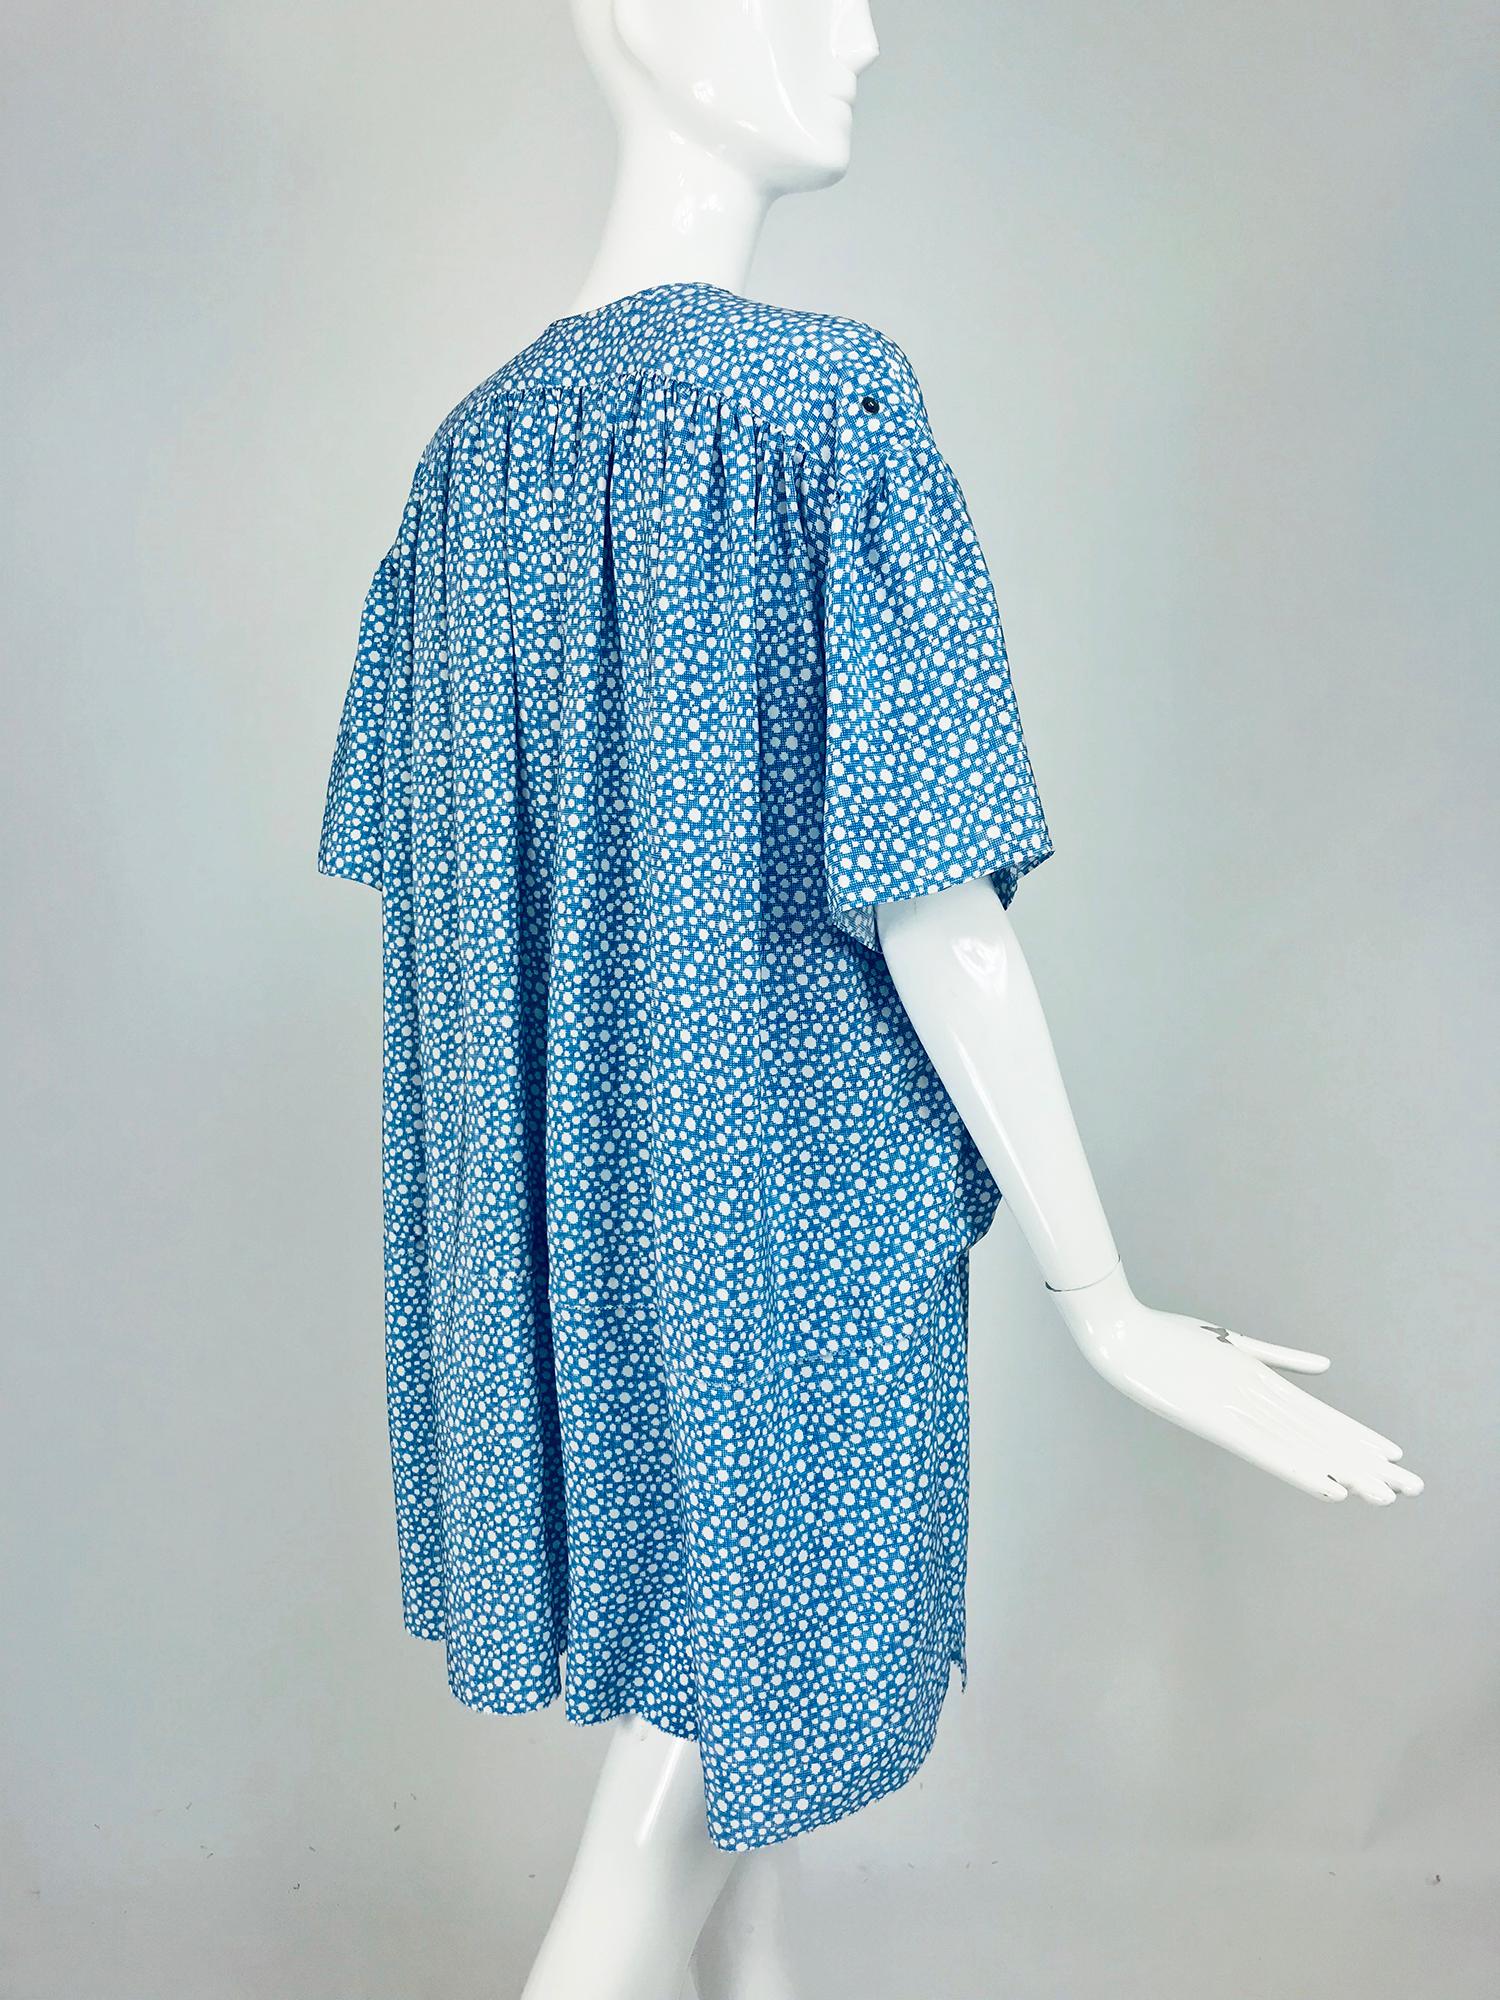 asymmetrical blue dress